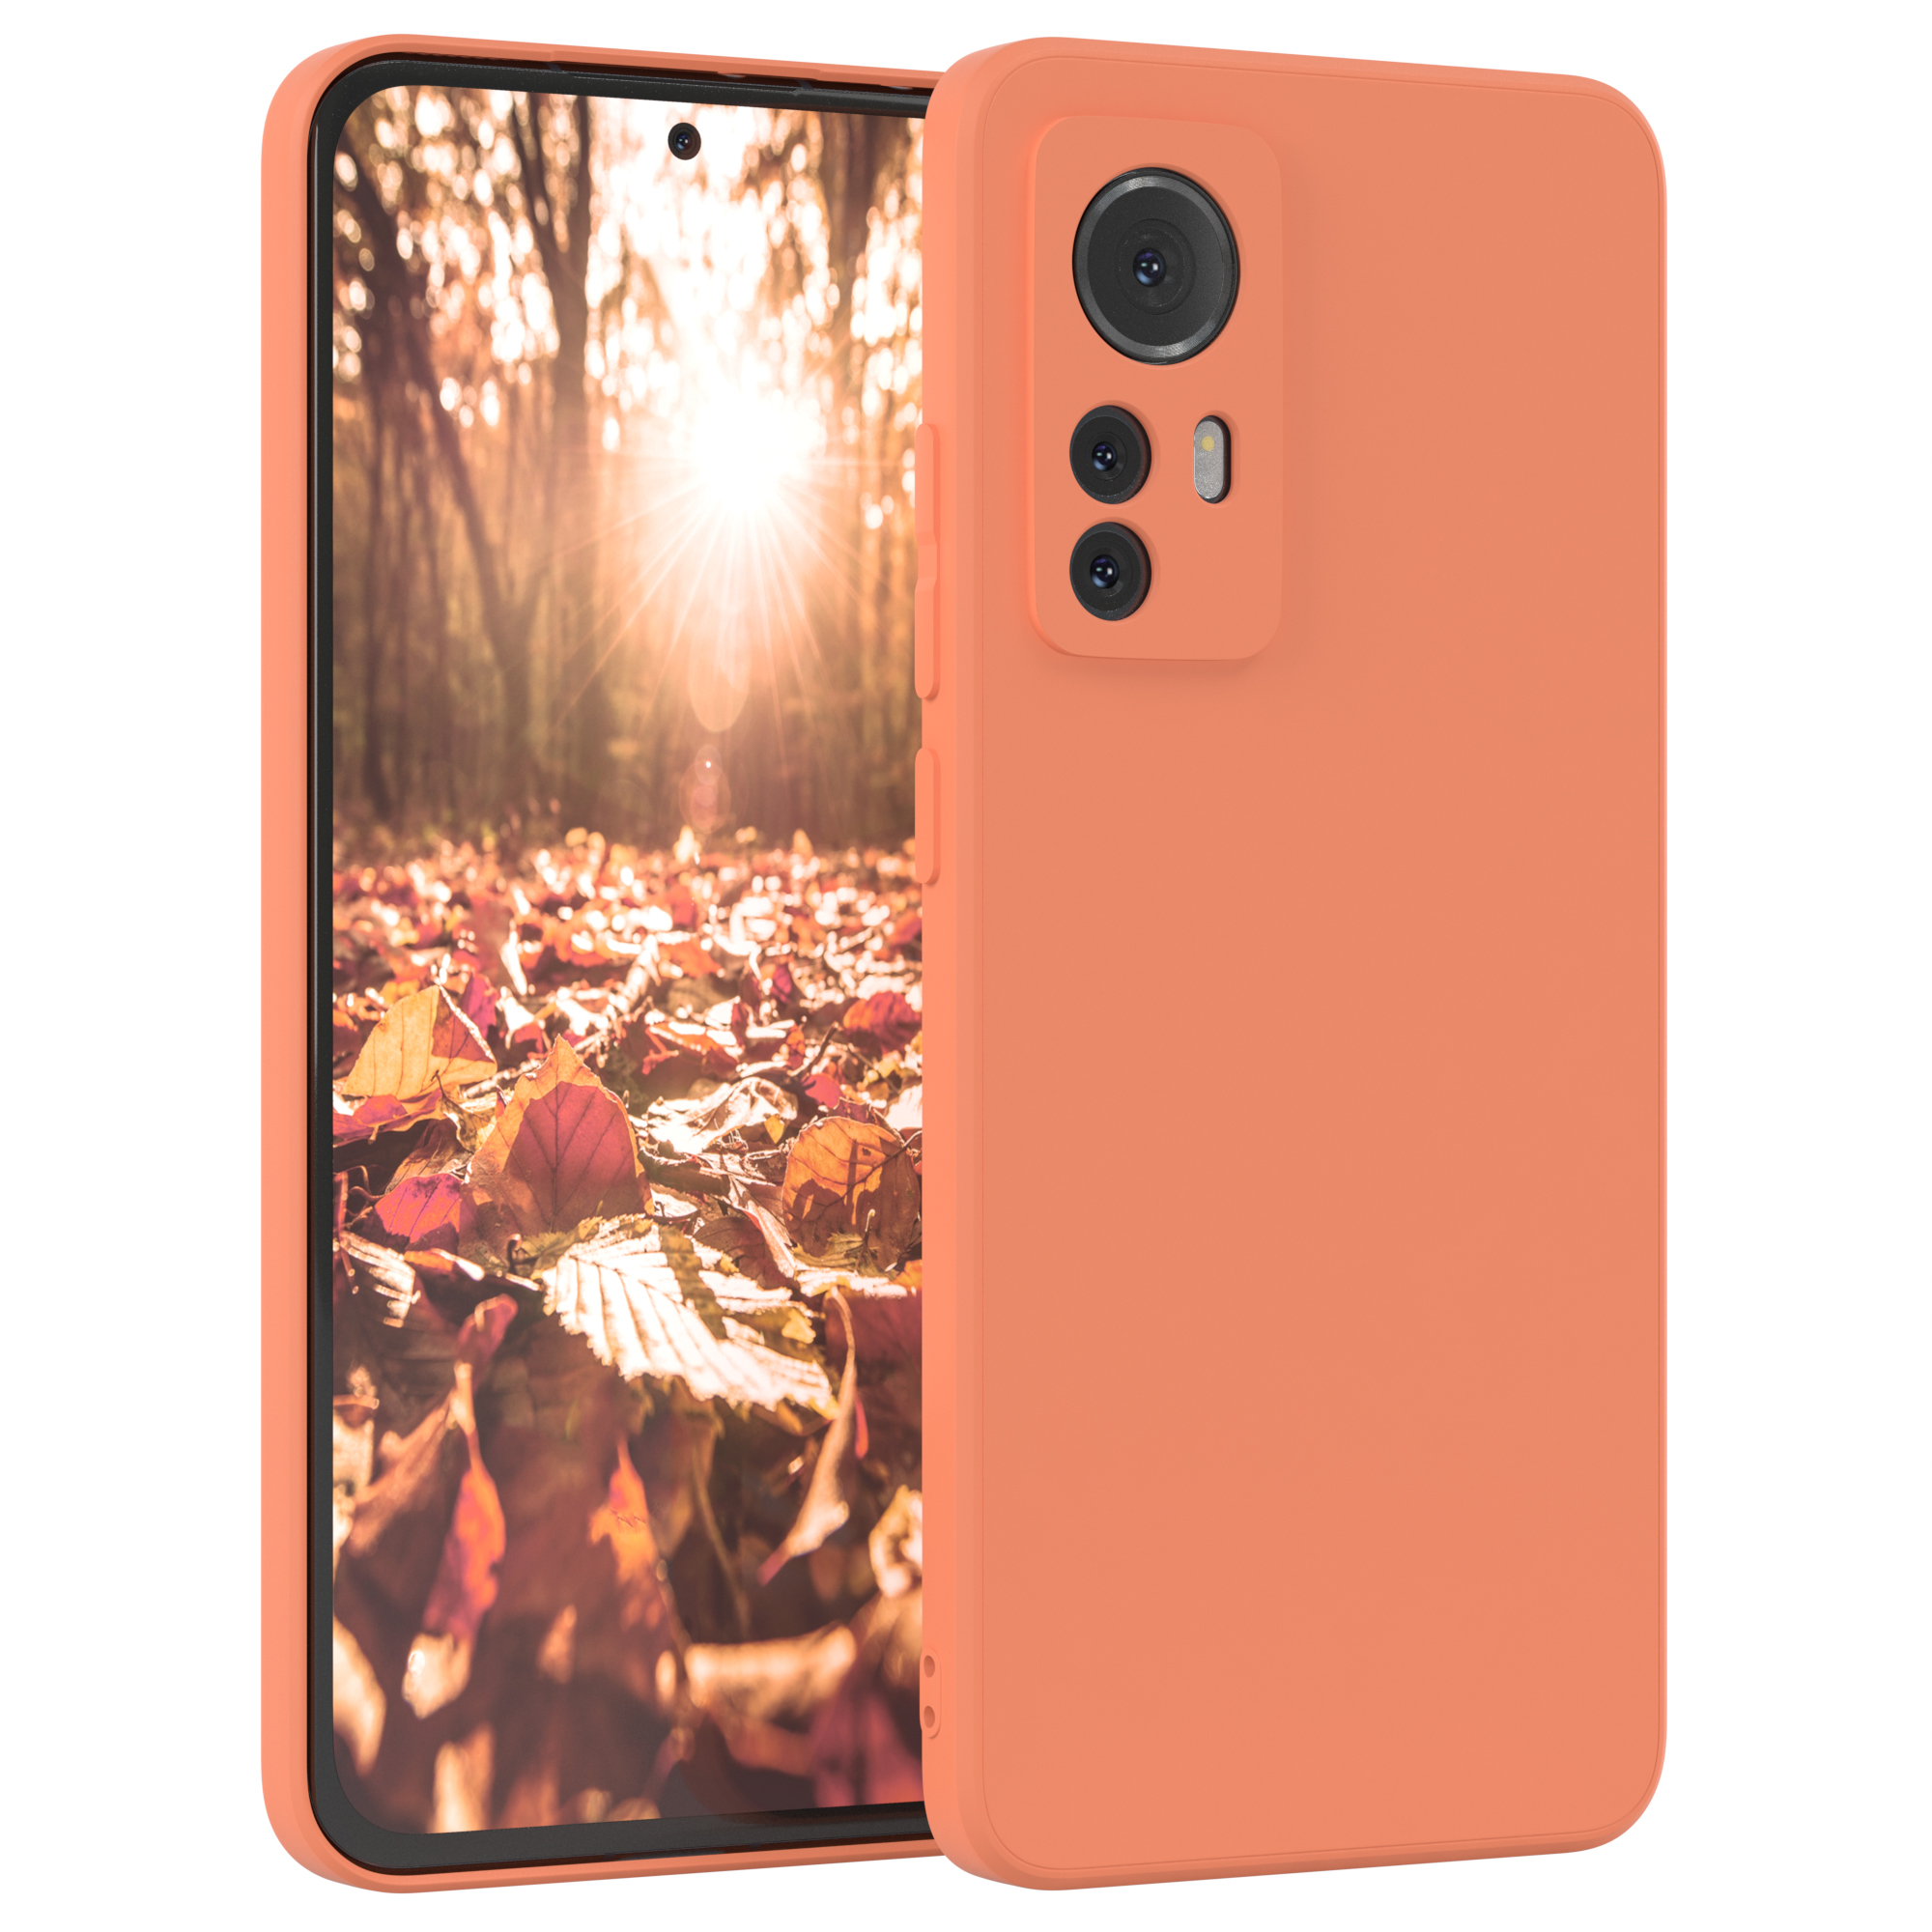 EAZY CASE 12X, Matt, Silikon TPU 12 Orange Handycase Backcover, / Xiaomi